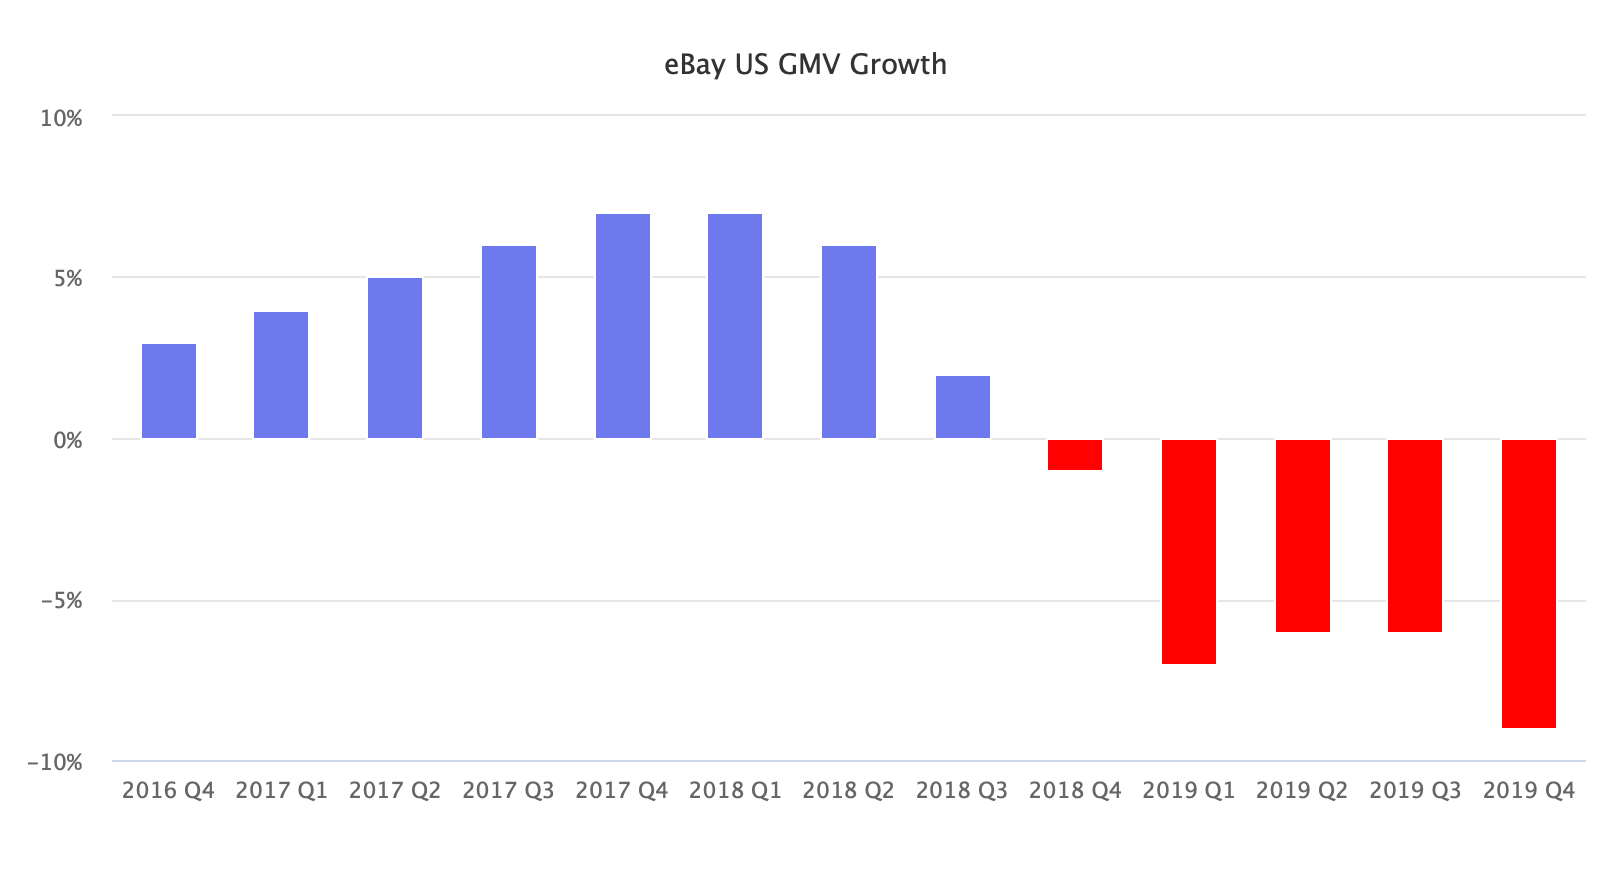 eBay US GMV growth